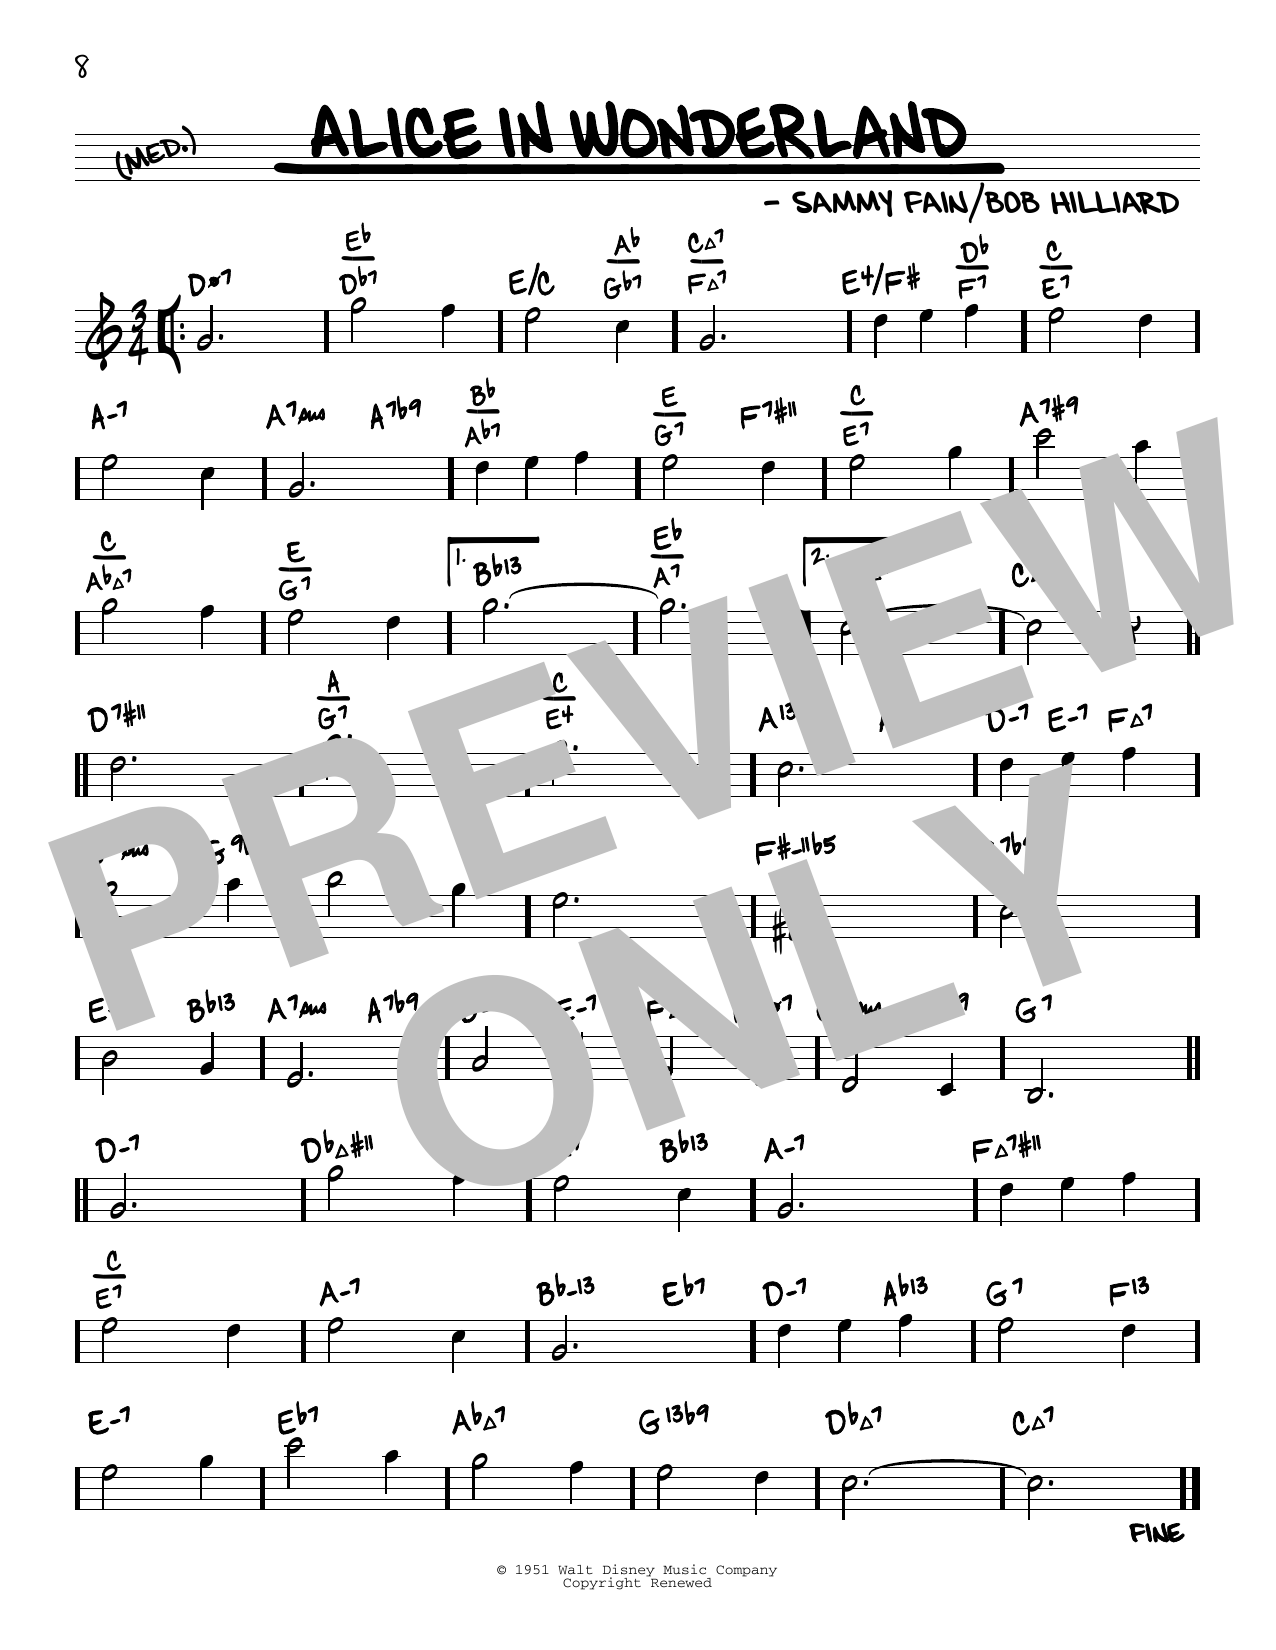 Sammy Fain Alice In Wonderland (arr. David Hazeltine) Sheet Music Notes & Chords for Real Book – Enhanced Chords - Download or Print PDF